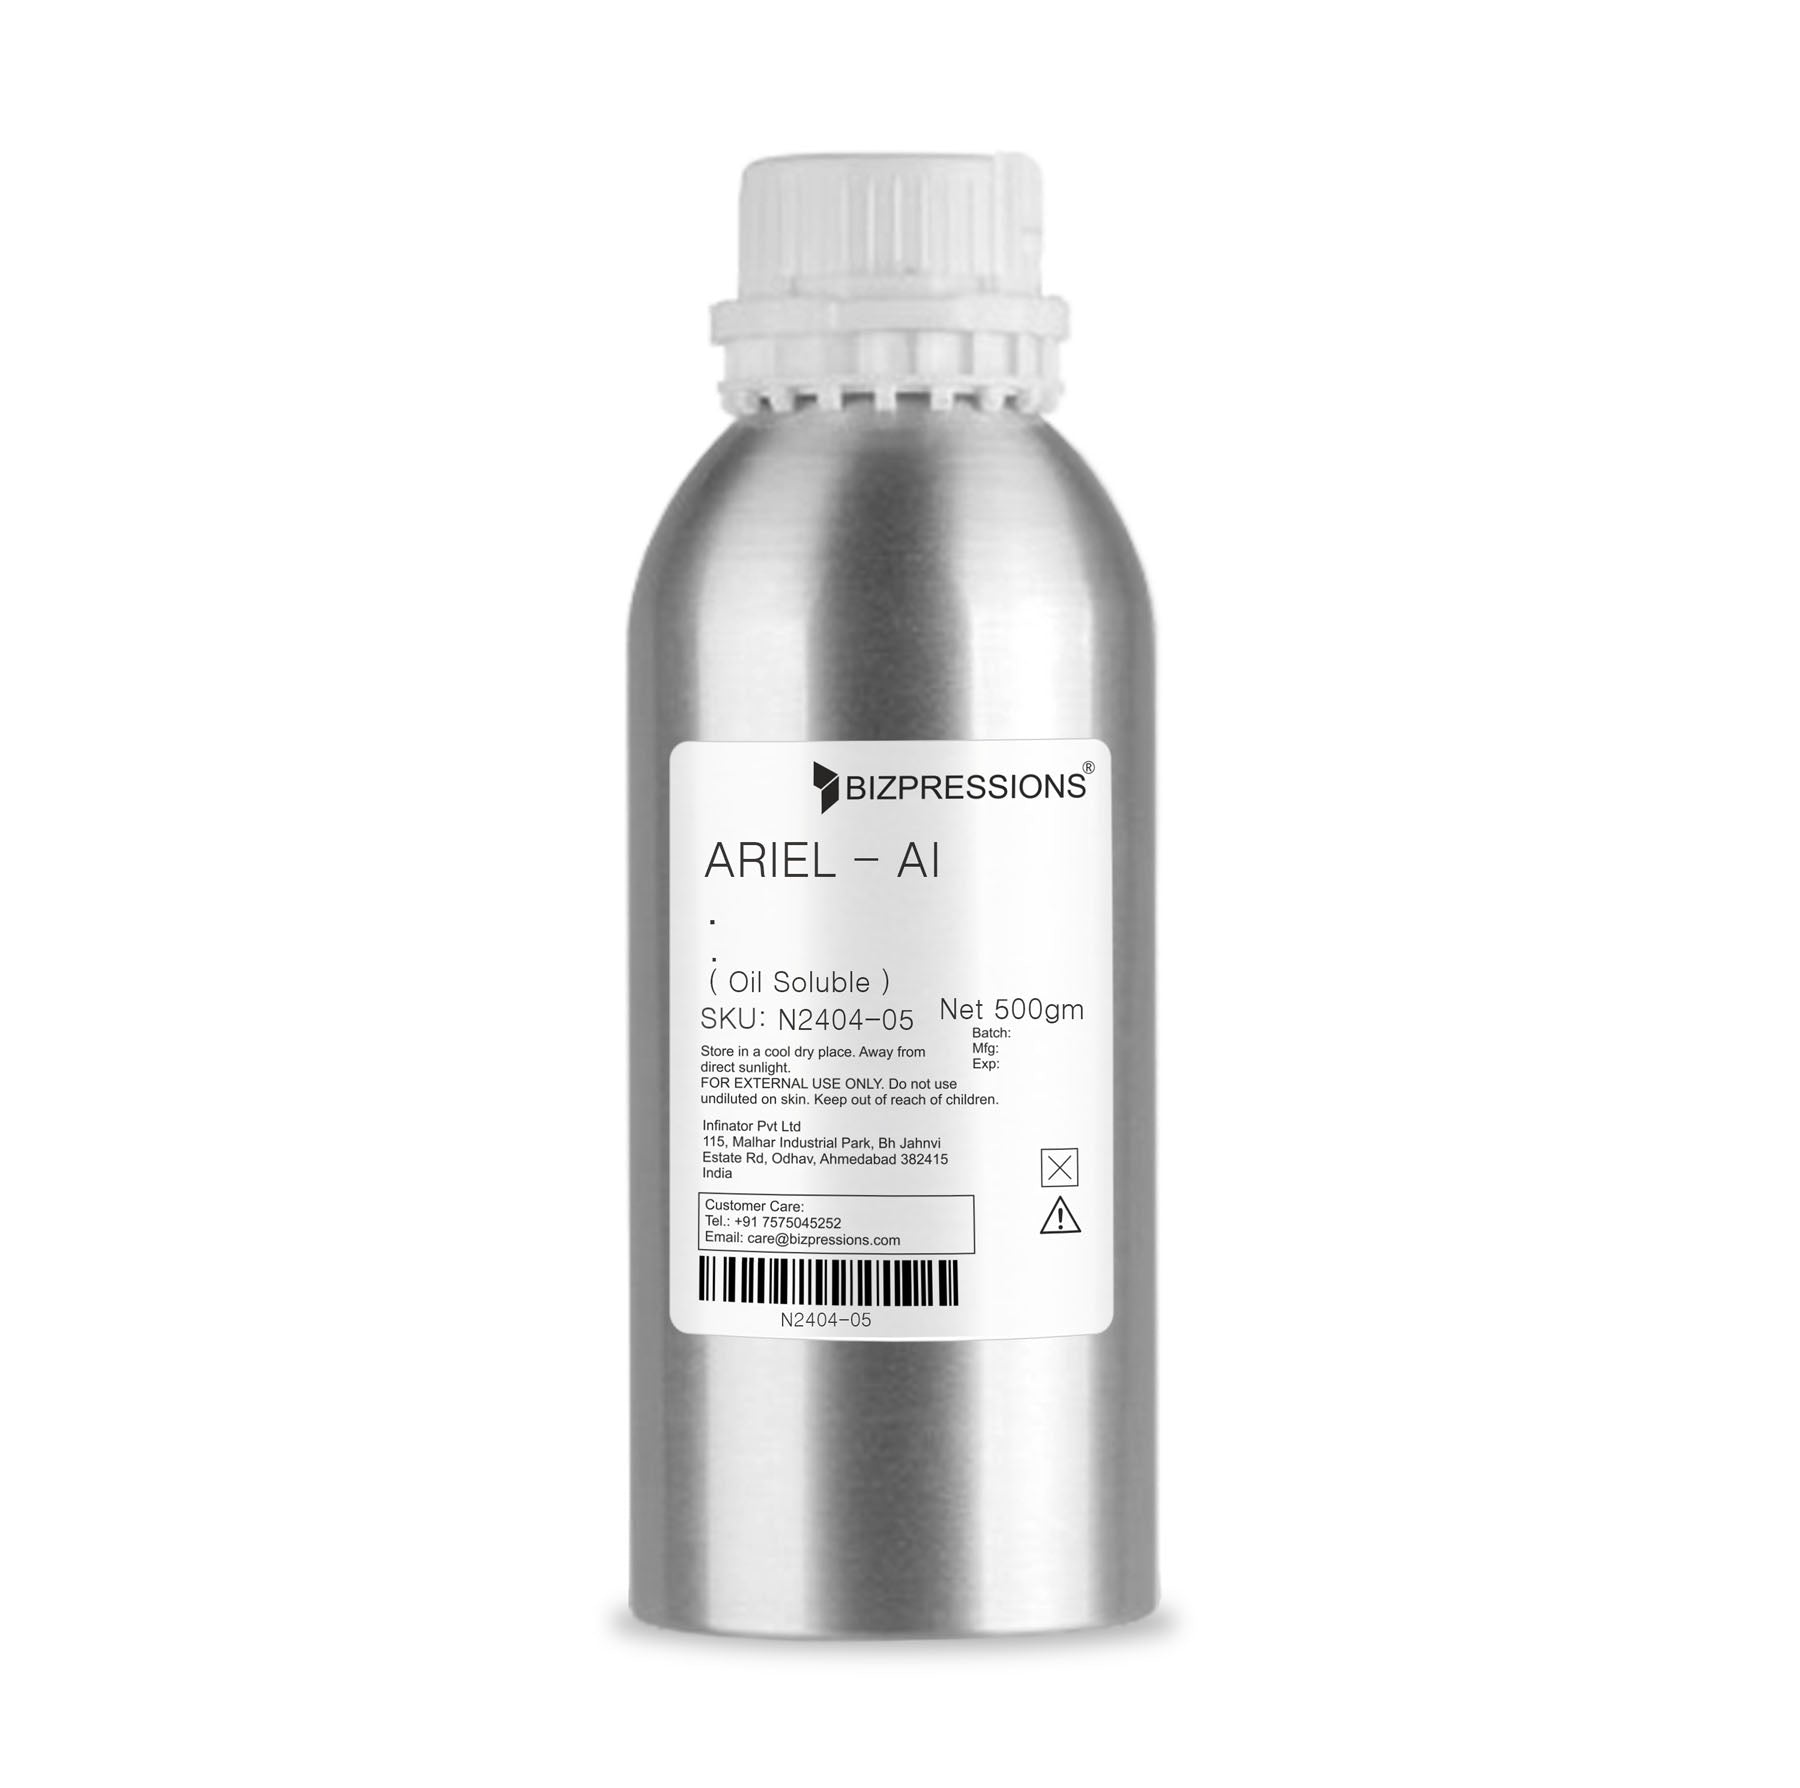 ARIEL - AI - Fragrance ( Oil Soluble ) - 500 gm